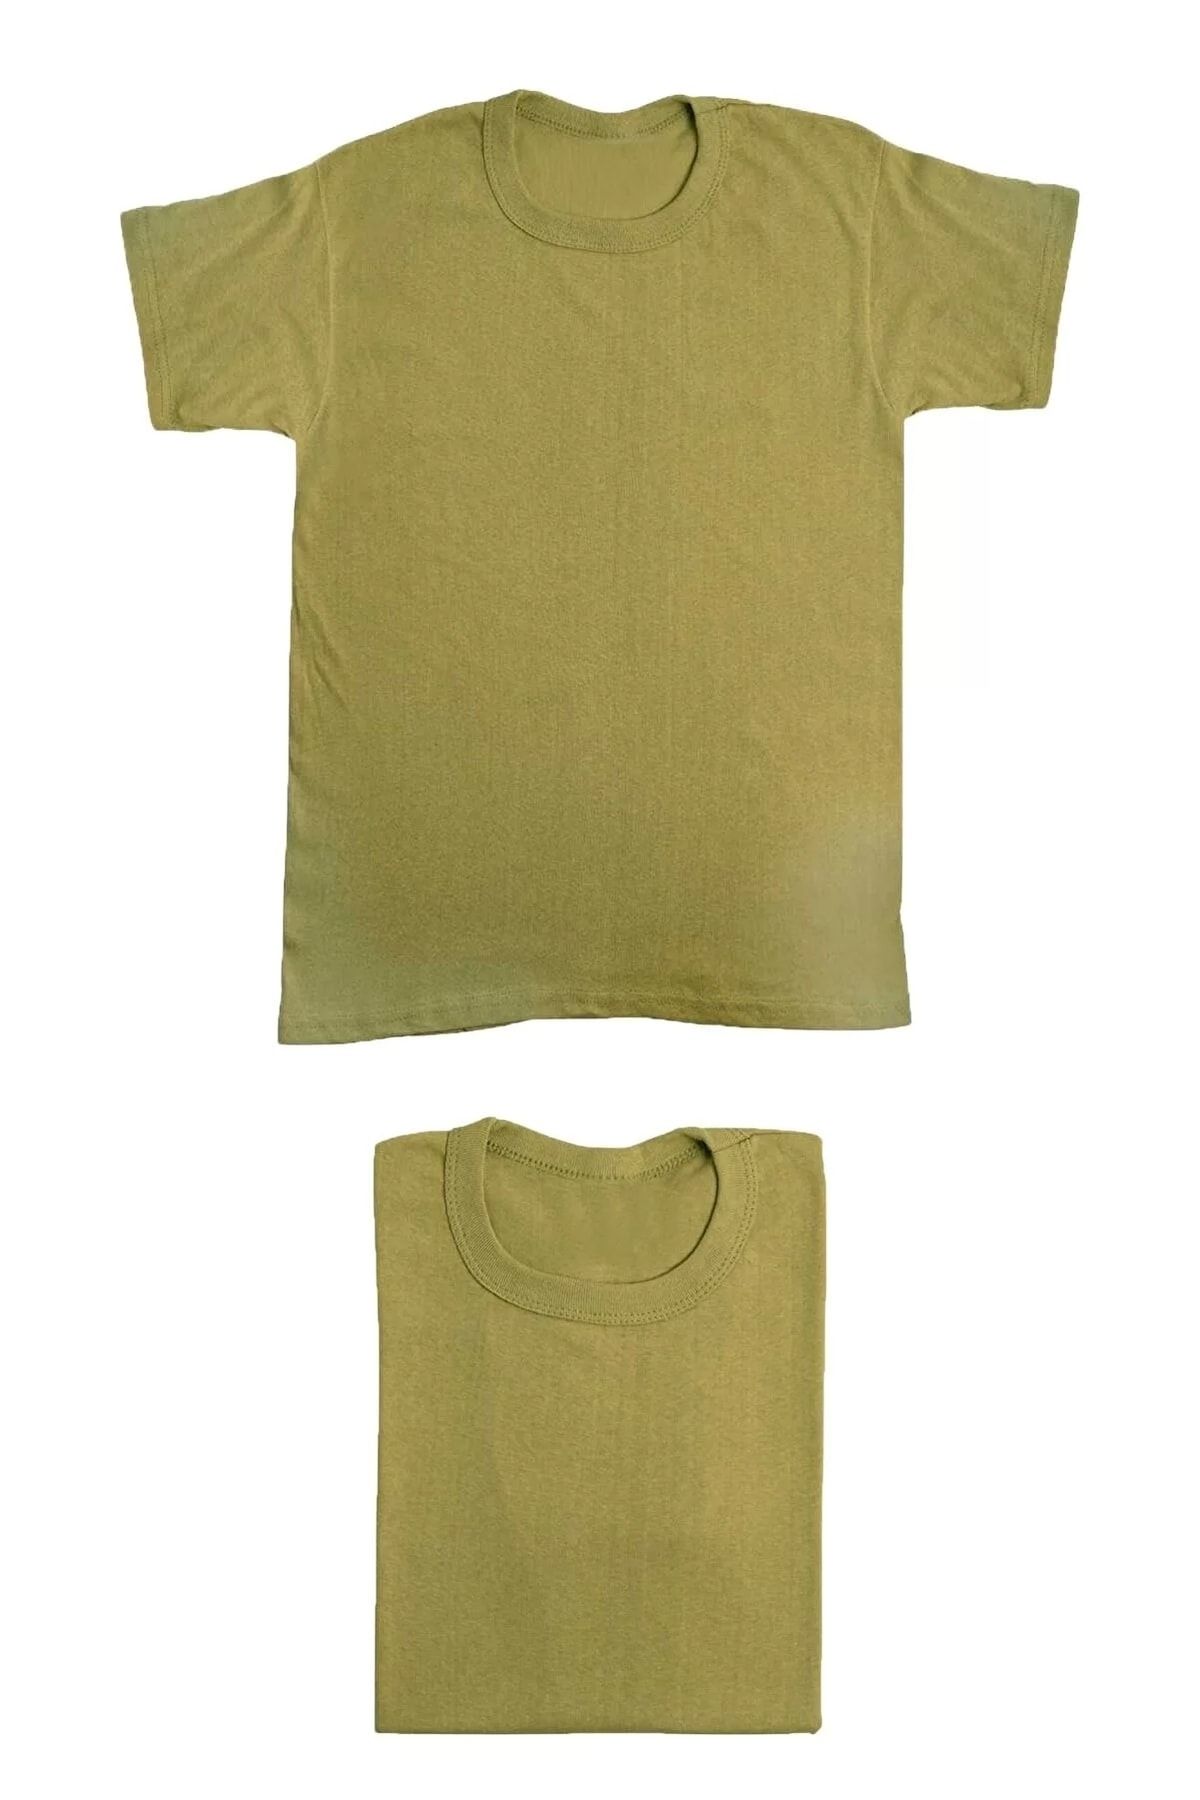 TERTİP Asker Fanilası (t-shirt) - Asker Malzemeleri